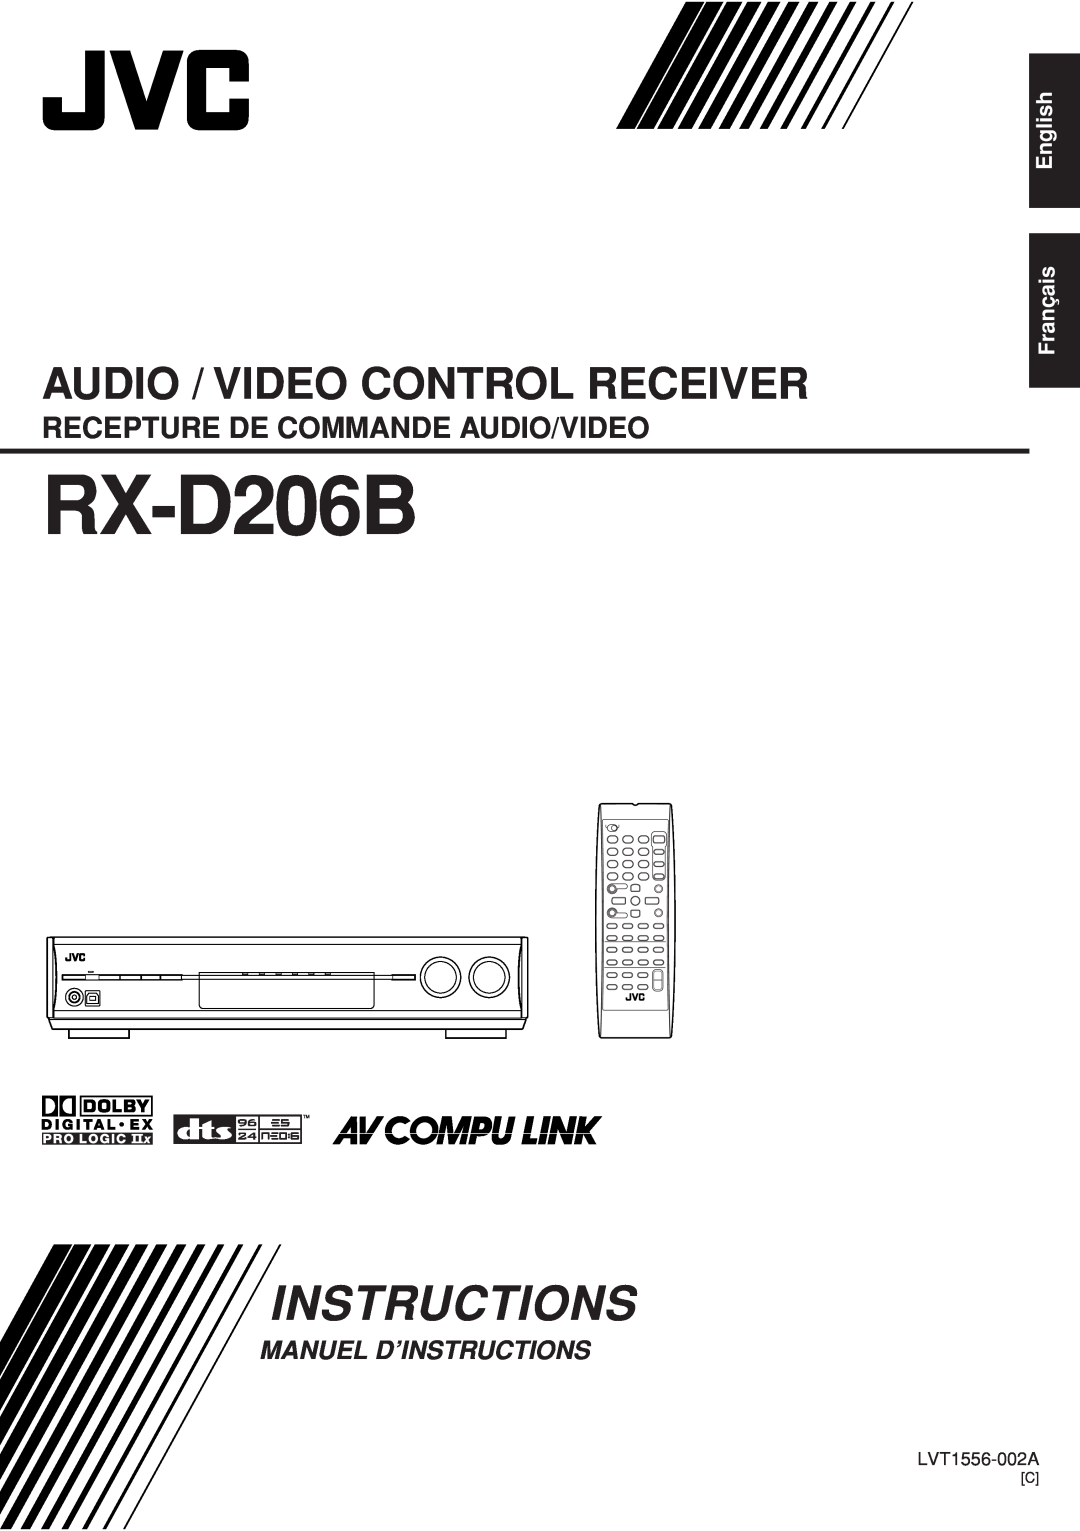 JVC RX-D206B, RX-D205S manual English Français, LVT1556-002A, Audio / Video Control Receiver, Manuel D’Instructions 